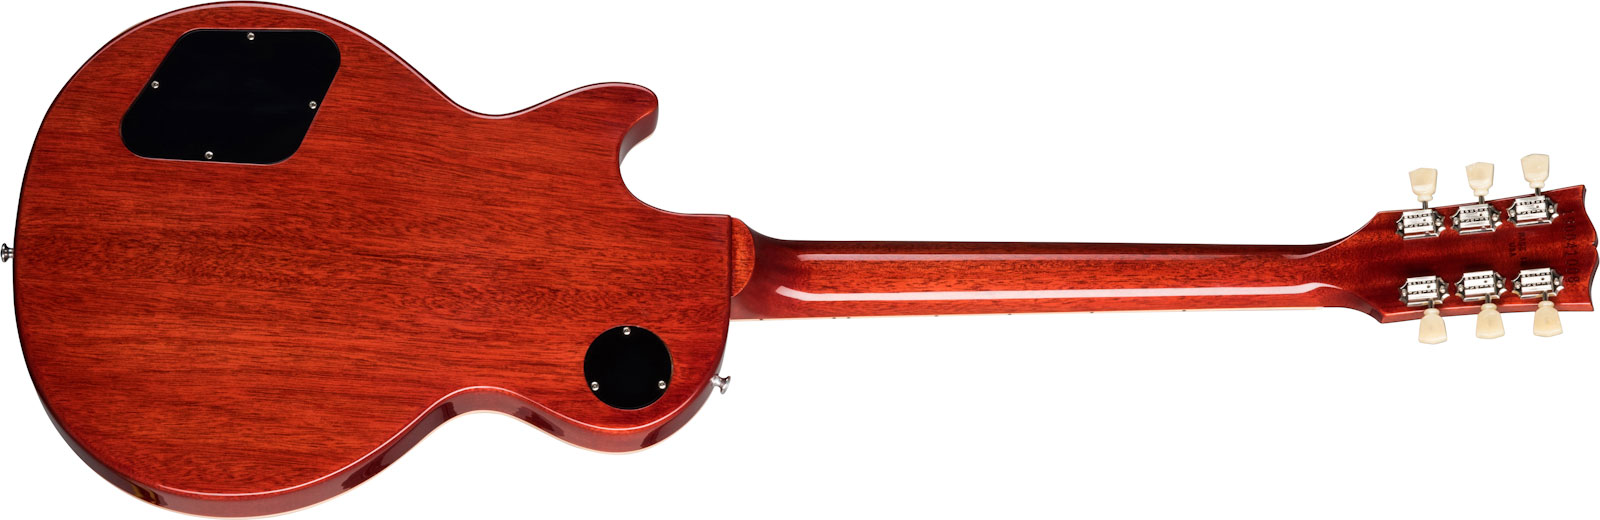 Gibson Les Paul Standard 50s 2h Ht Rw - Heritage Cherry Sunburst - Single cut electric guitar - Variation 4